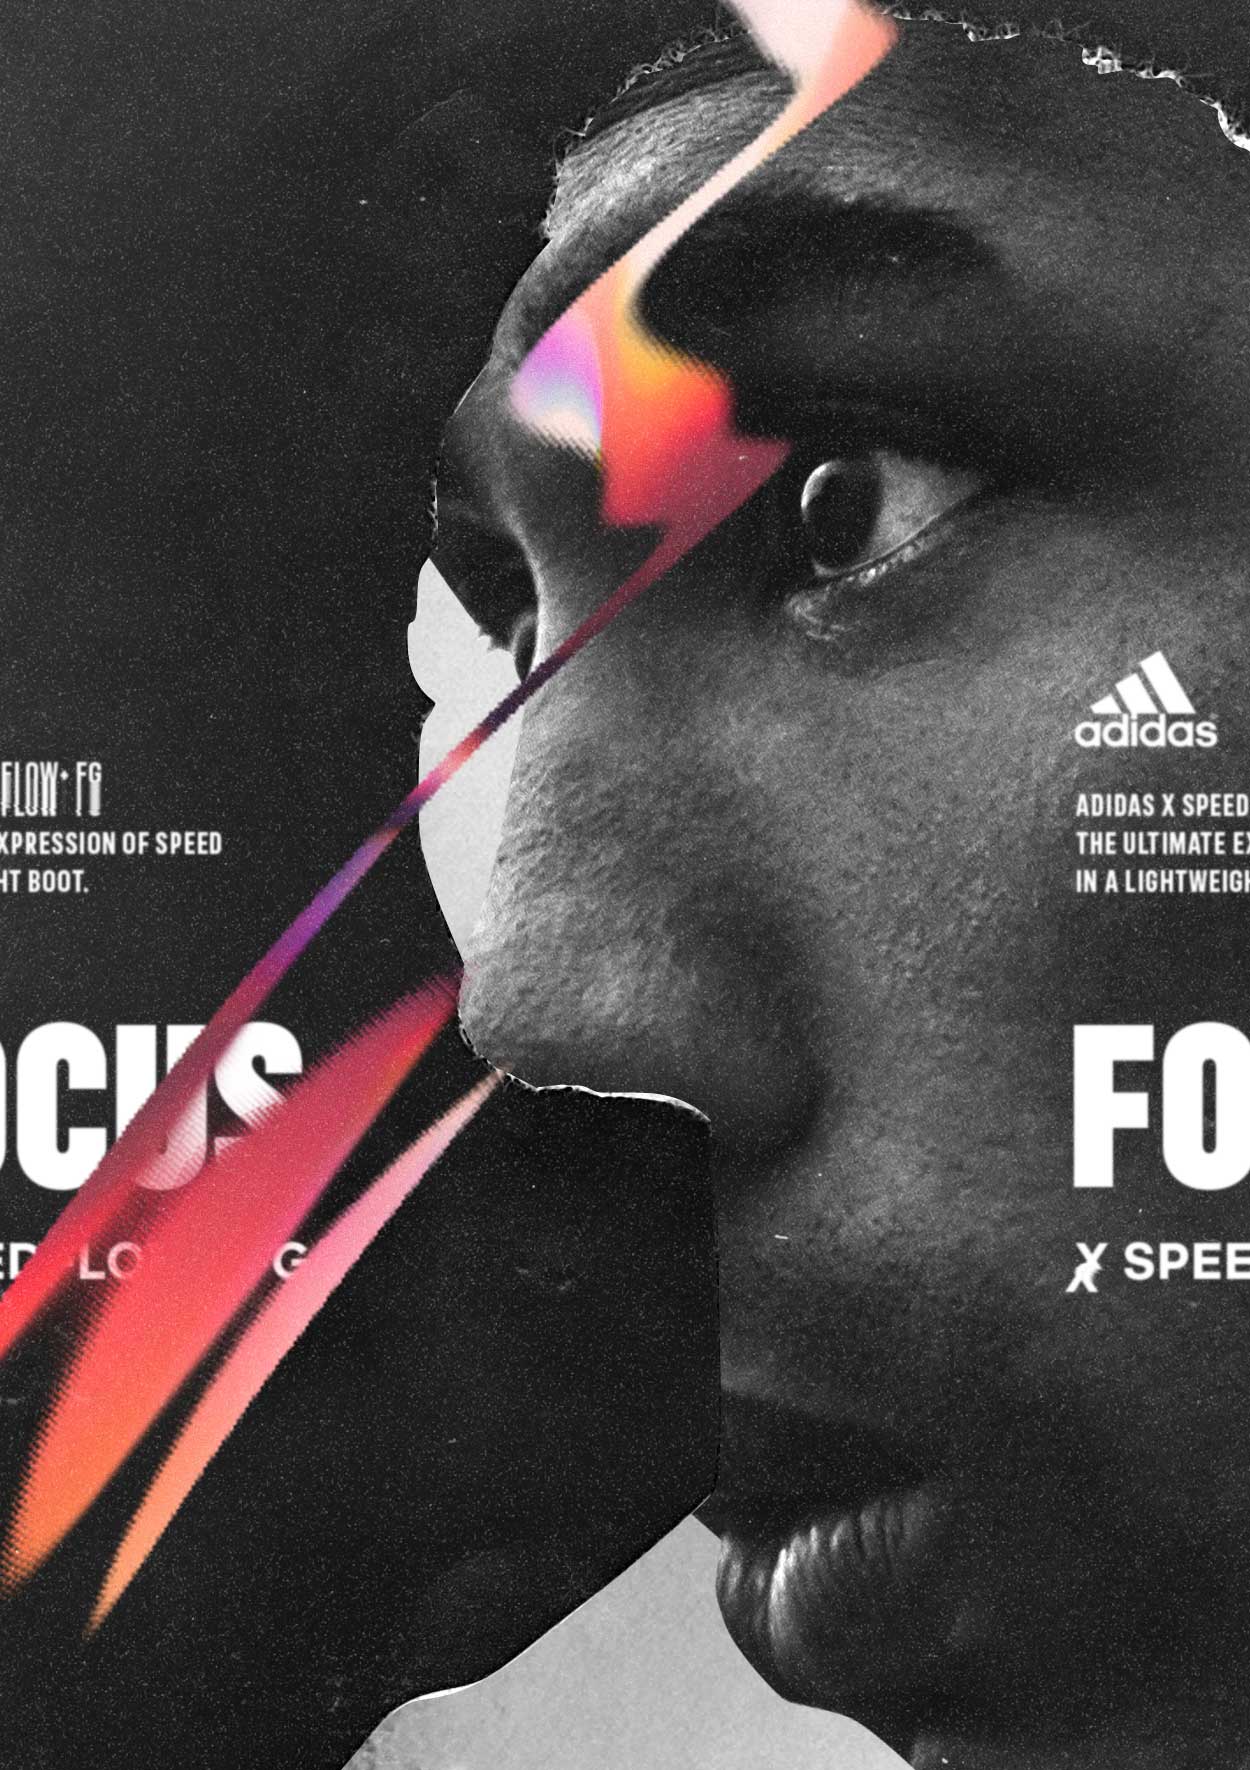 AdidasFootball_Concept_02_Poster_01_FlorianStumpe